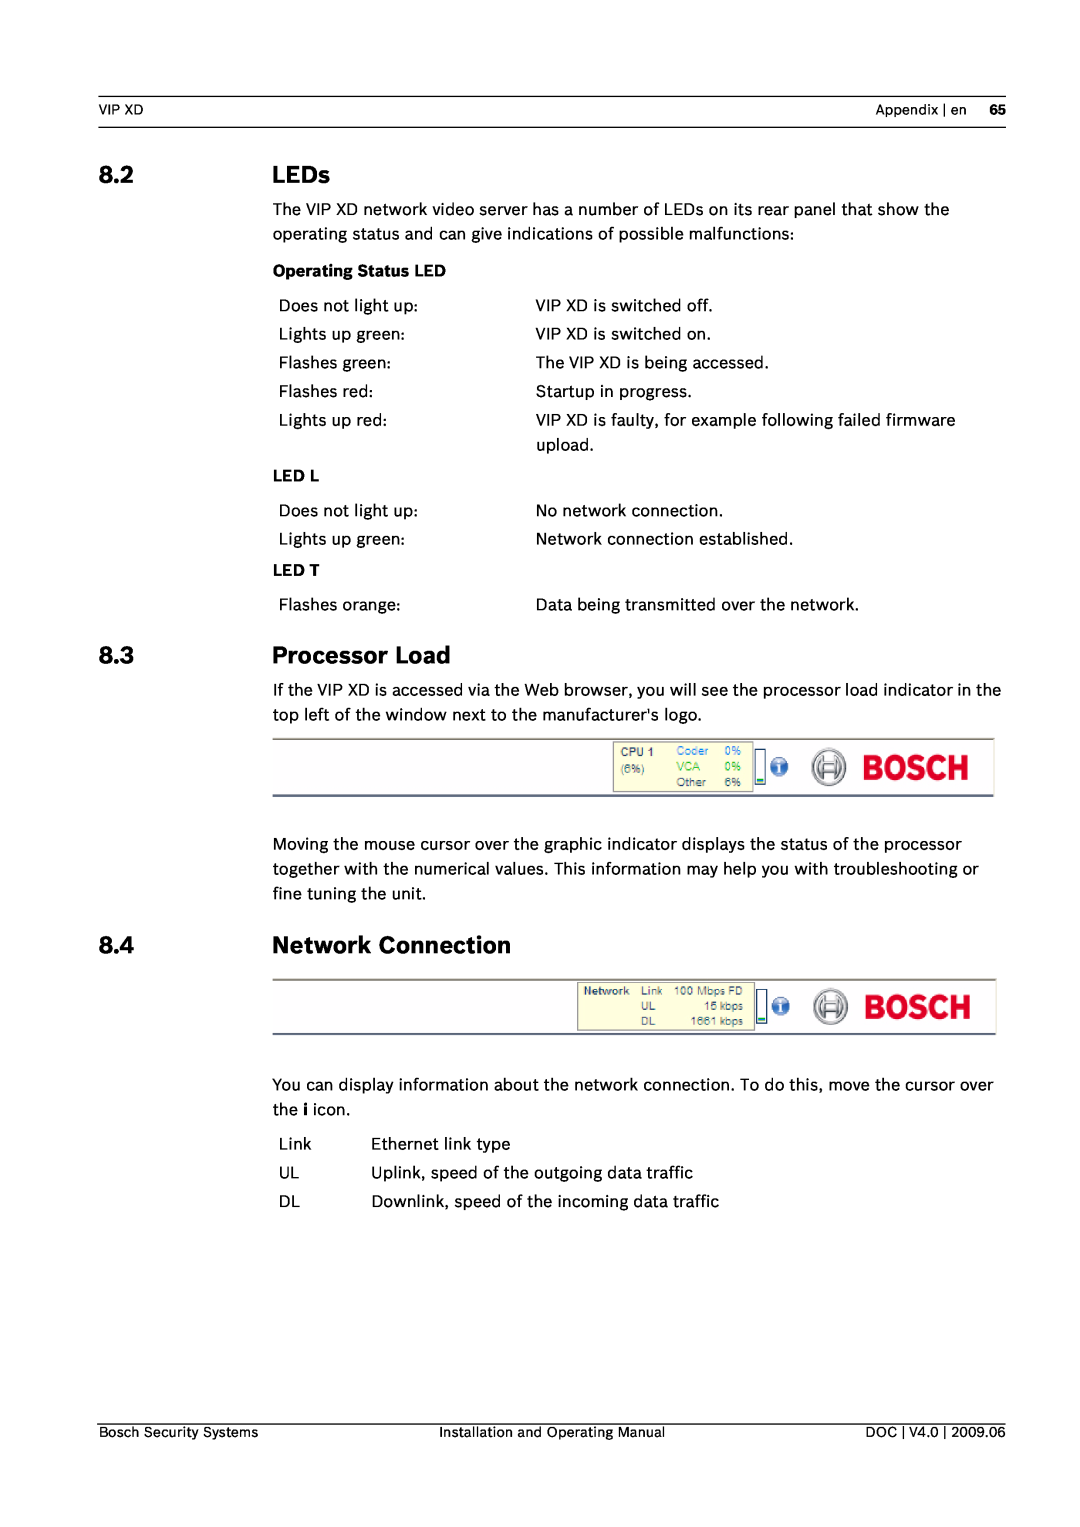 Bosch Appliances VIP, XD manual LEDs, 8.3Processor Load, Network Connection, Operating Status LED, Led L, Led T 